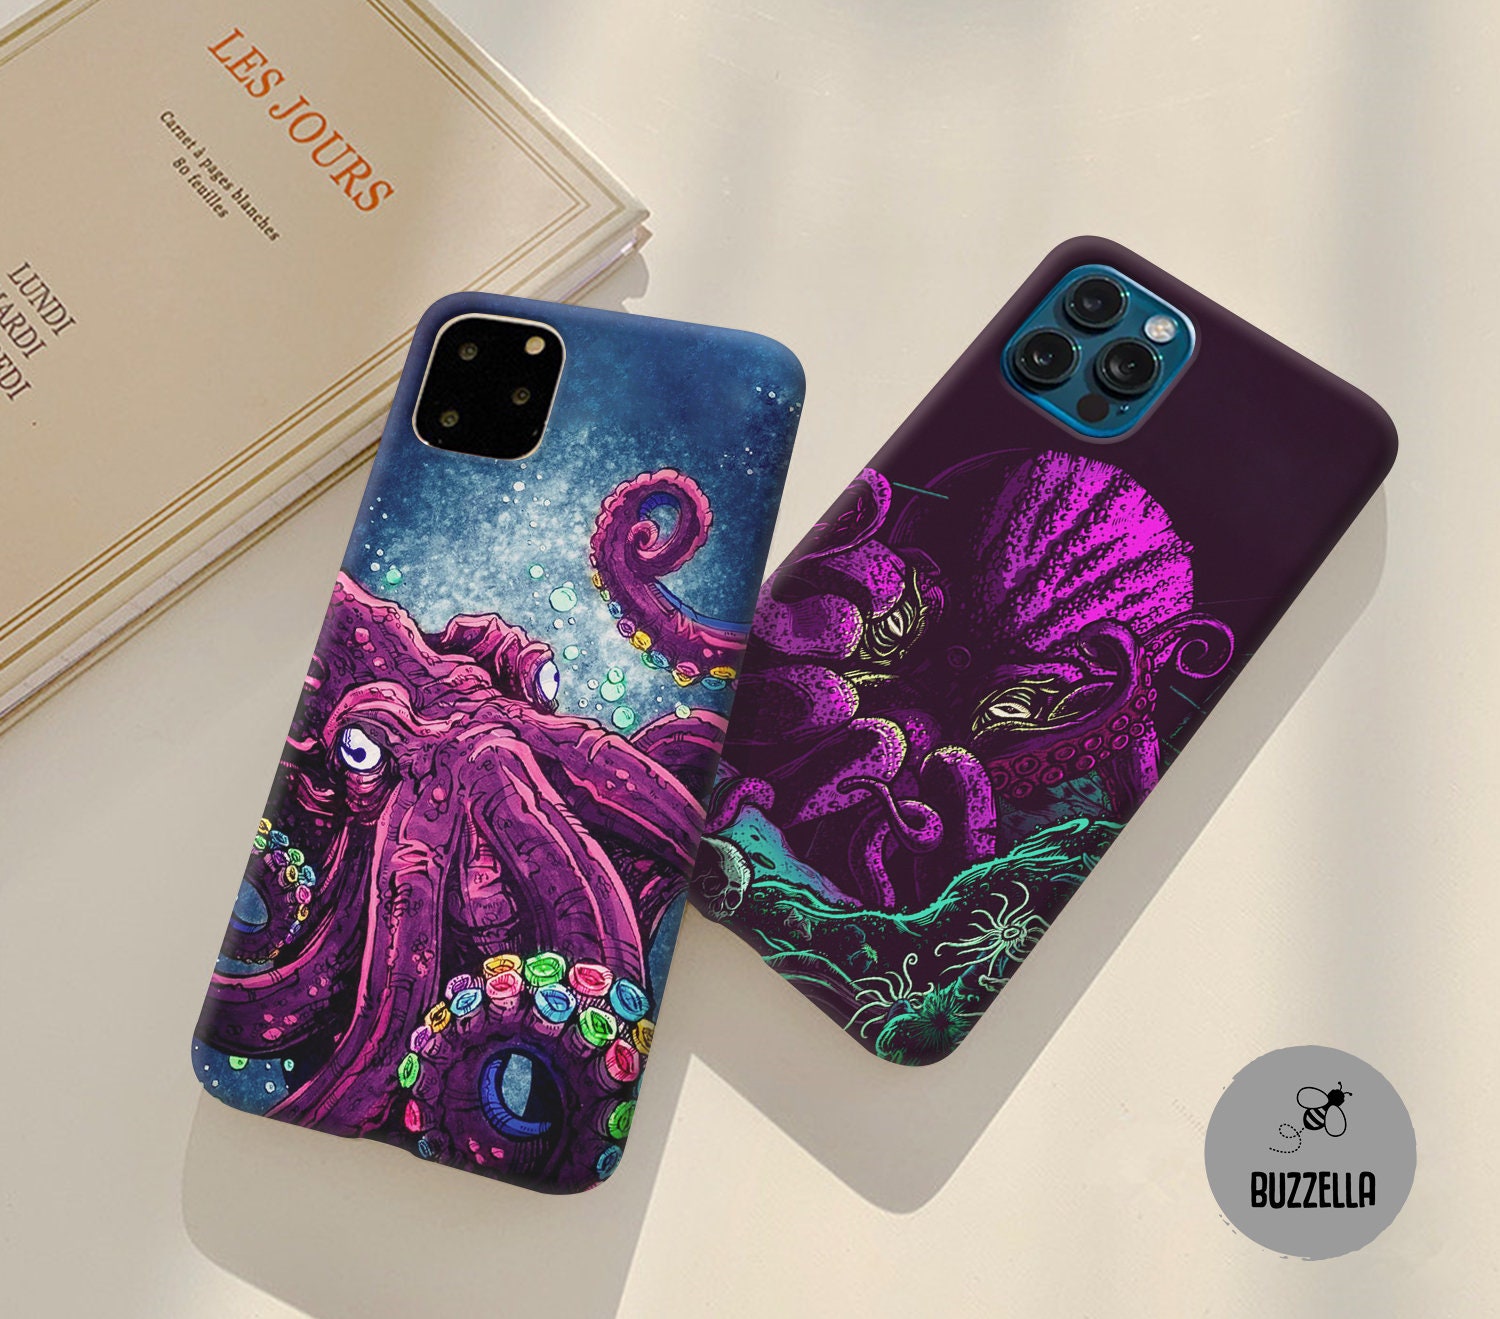 Talkingcase Slim Phone Case Compatible for Motorola Moto G Stylus 5G 2023  (Not 4G), w/Glass Screen Protector, Love Heart Rainbow Print, Light Weight